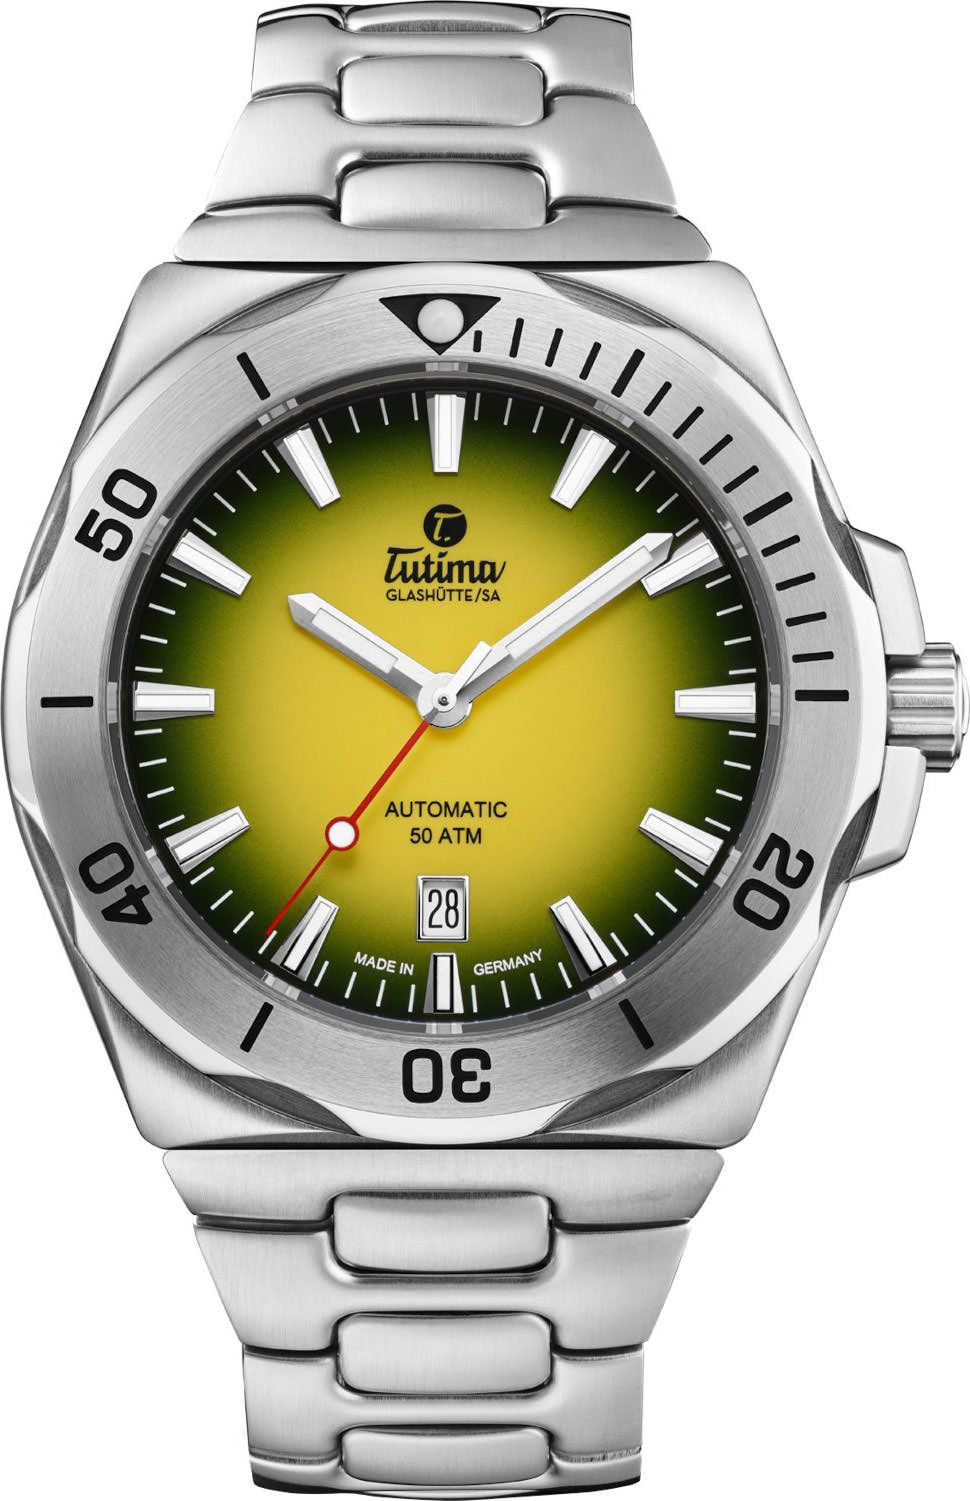 Tutima Glashütte M2 Seven Seas S Yellow Dial 44 mm Automatic Watch For Men - 1